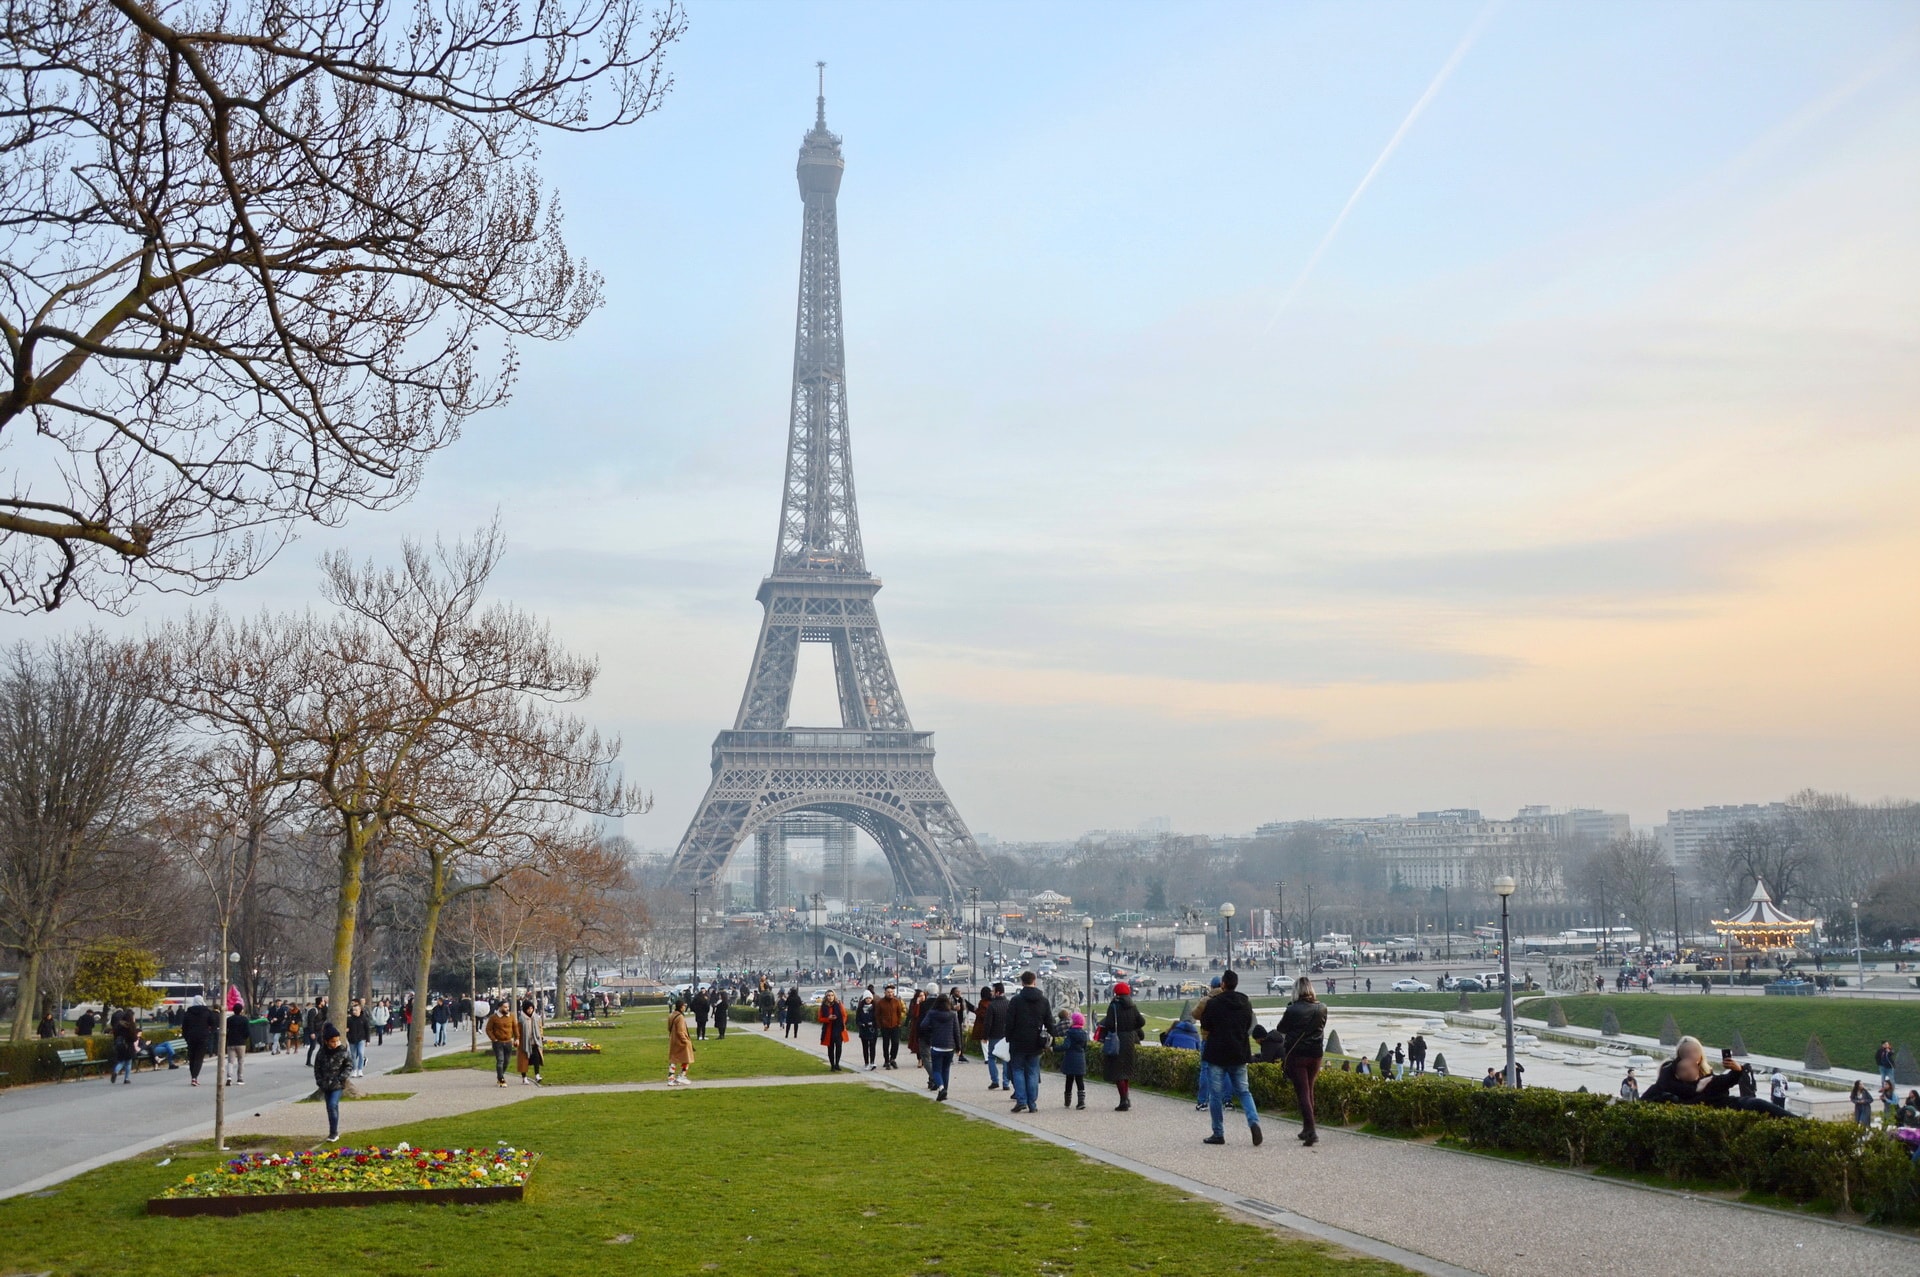 The Eiffel Tower, looking from Jardins du Trocadéro garden